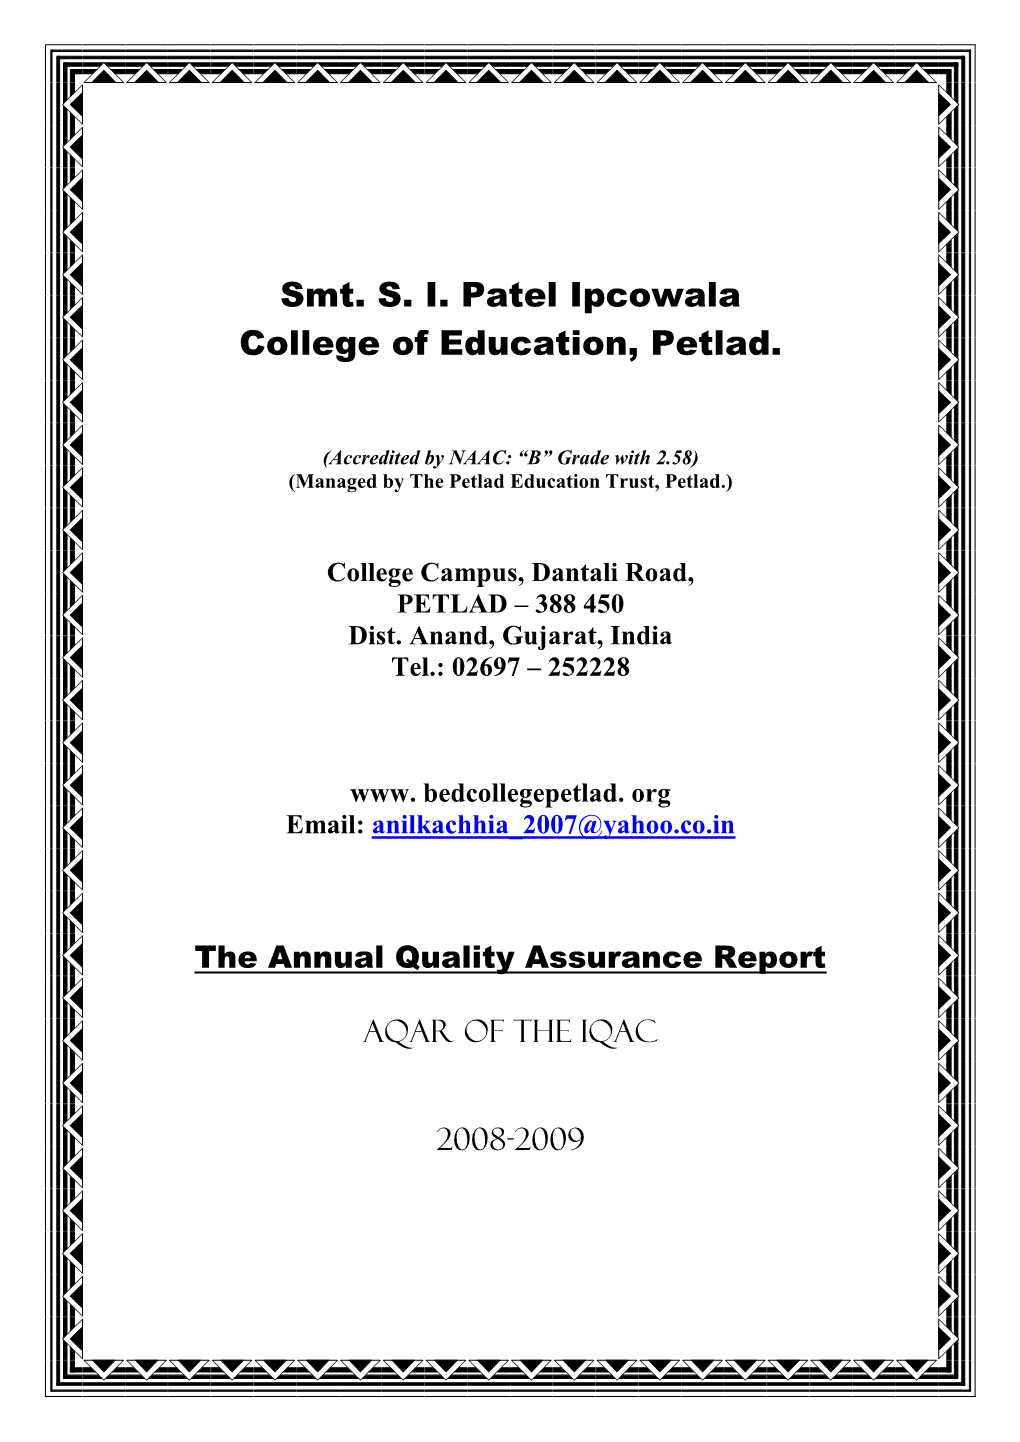 Smt. S. I. Patel Ipcowala College of Education, Petlad